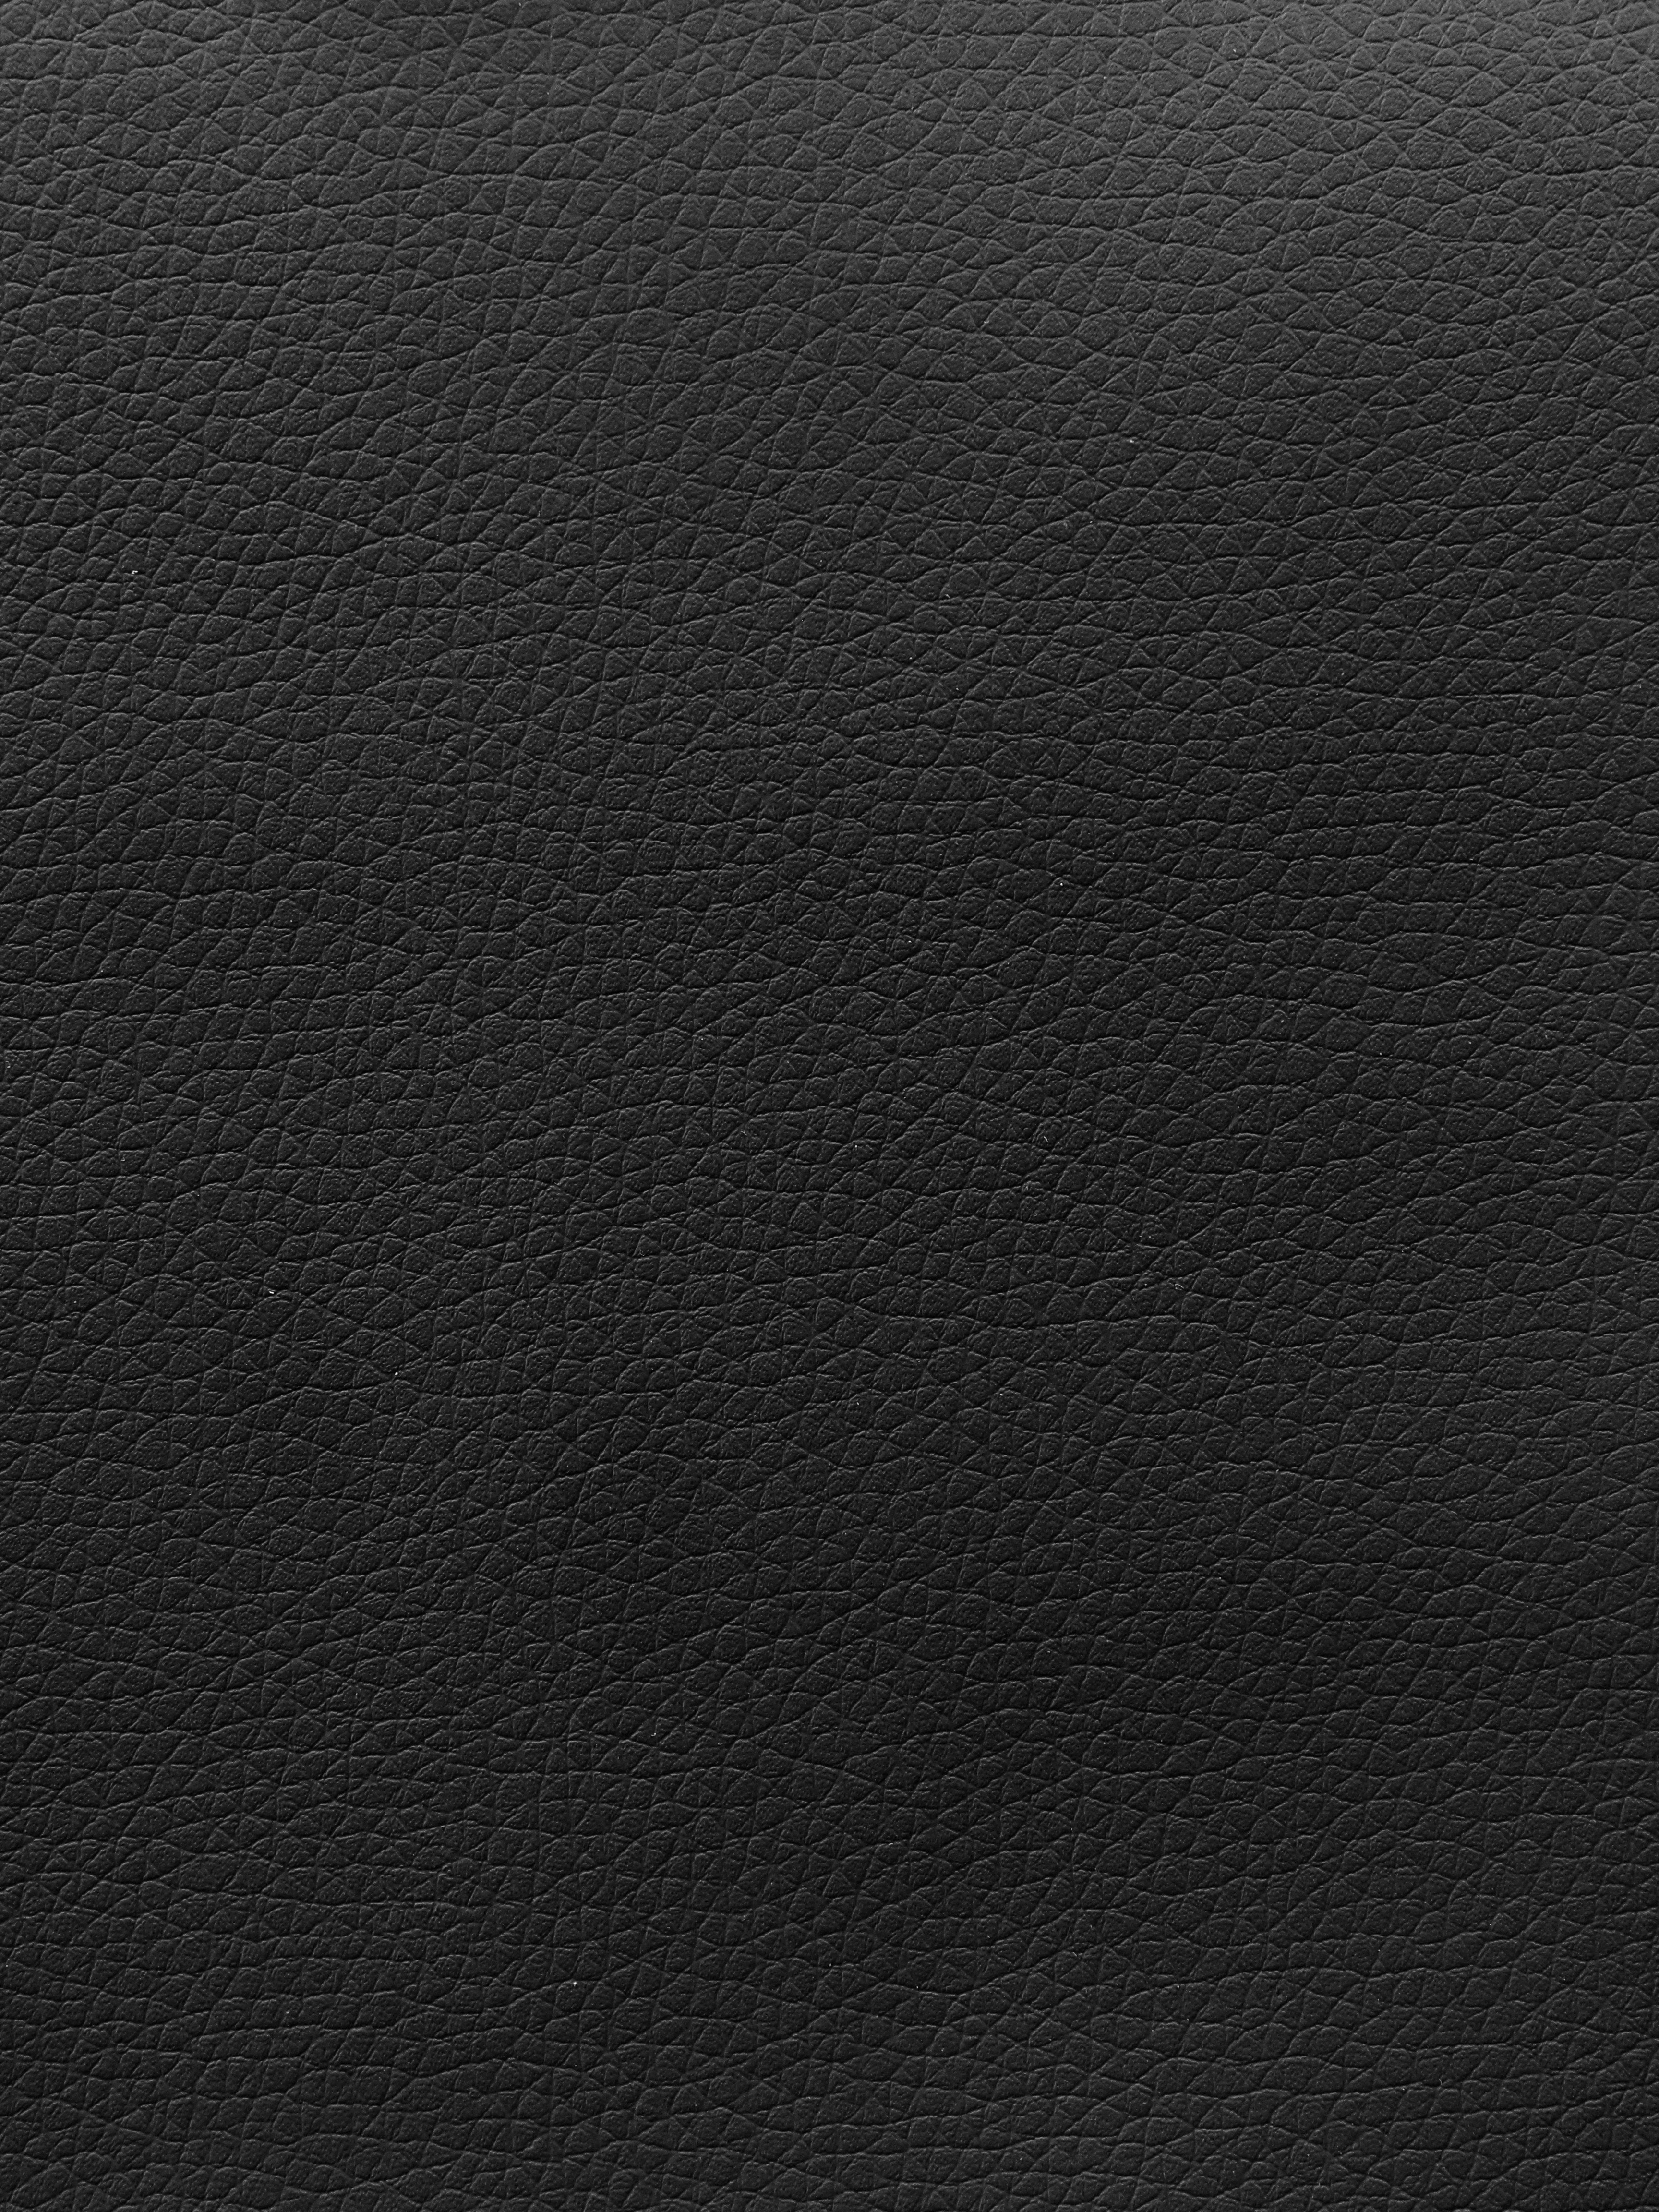 Black Leather Texture Dark Embossed Fabric Stock Photo Wallpaper